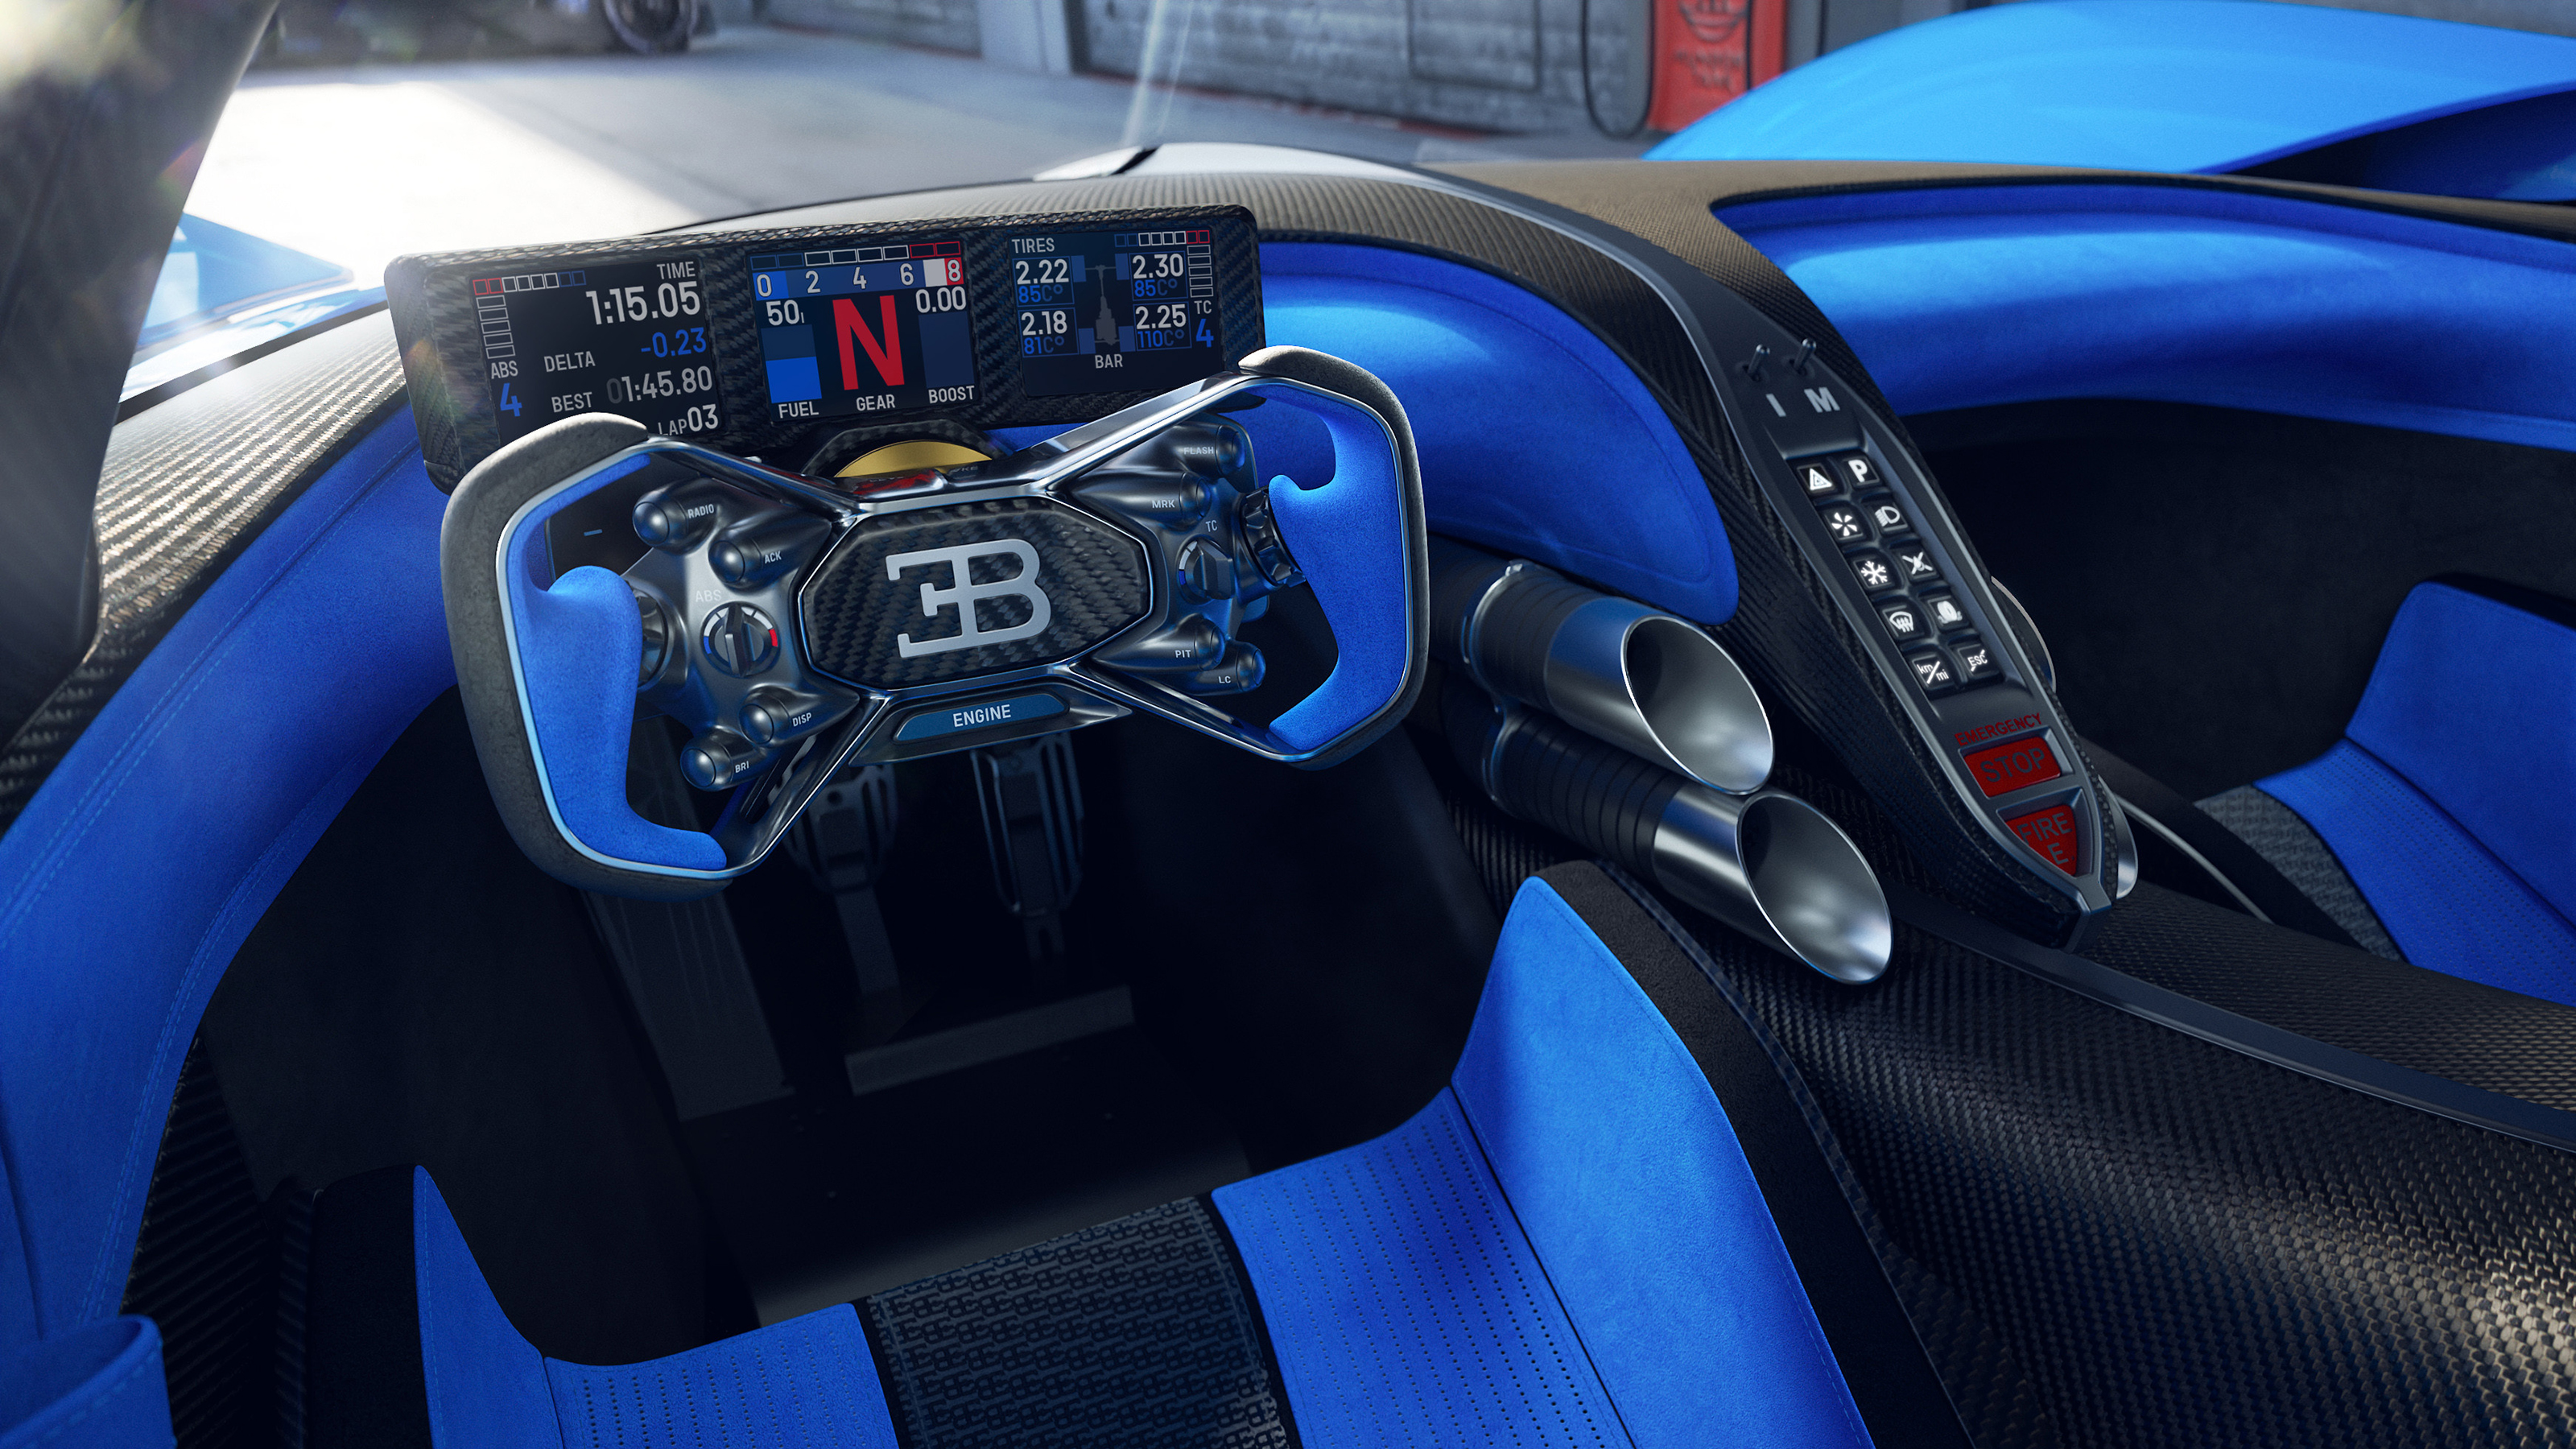 A first look inside the £3.5m Bugatti Bolide hypercar